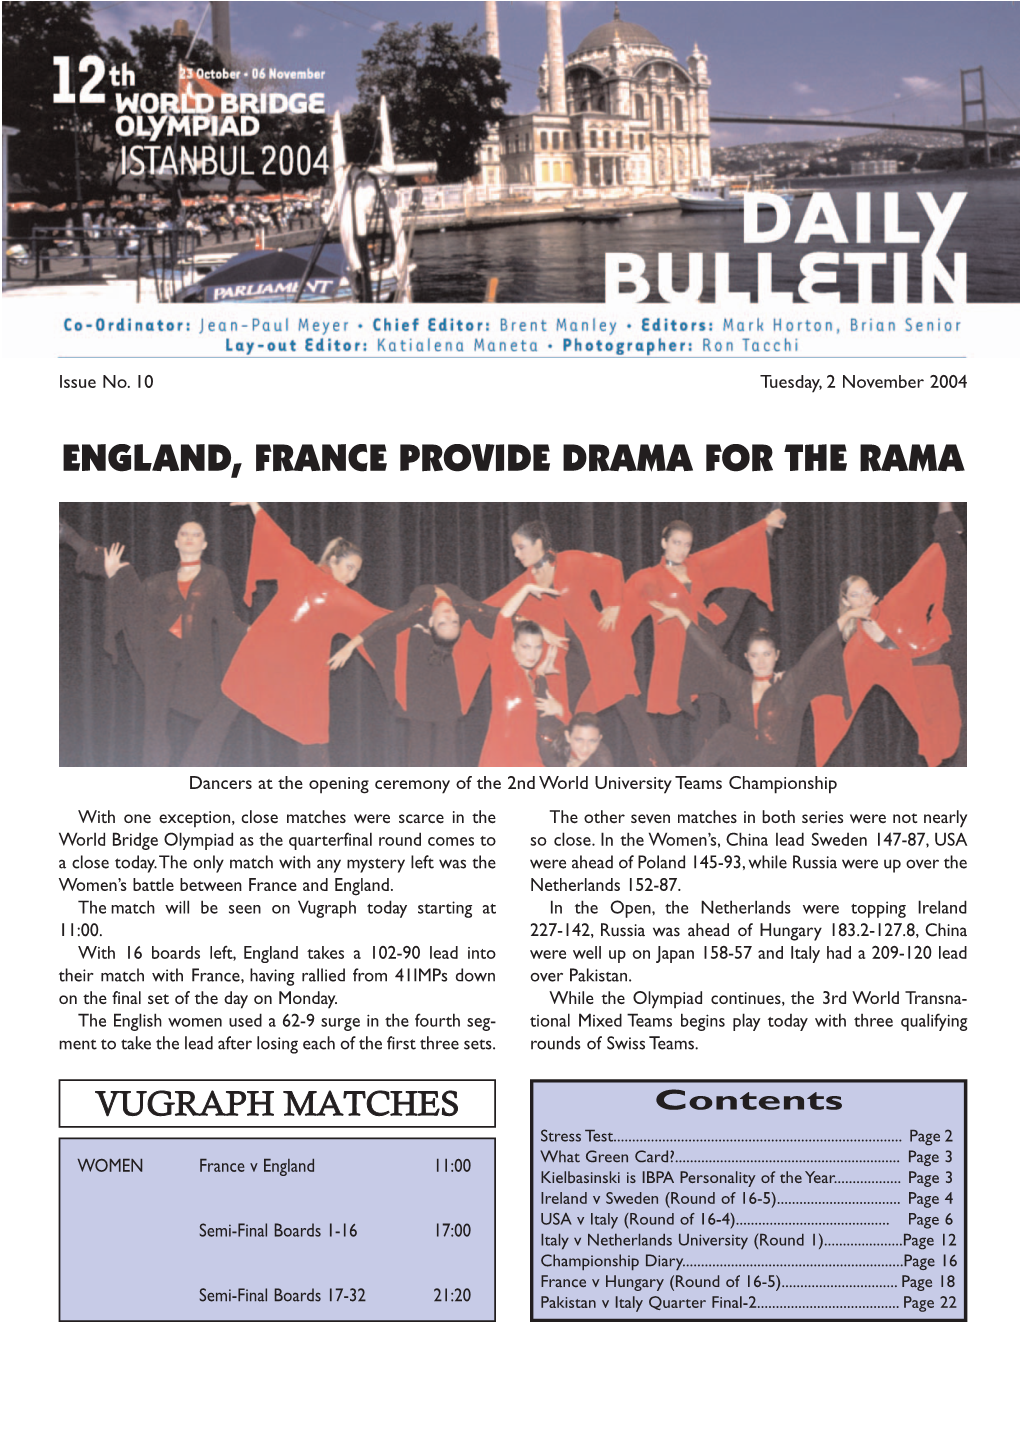 England, France Provide Drama for the Rama